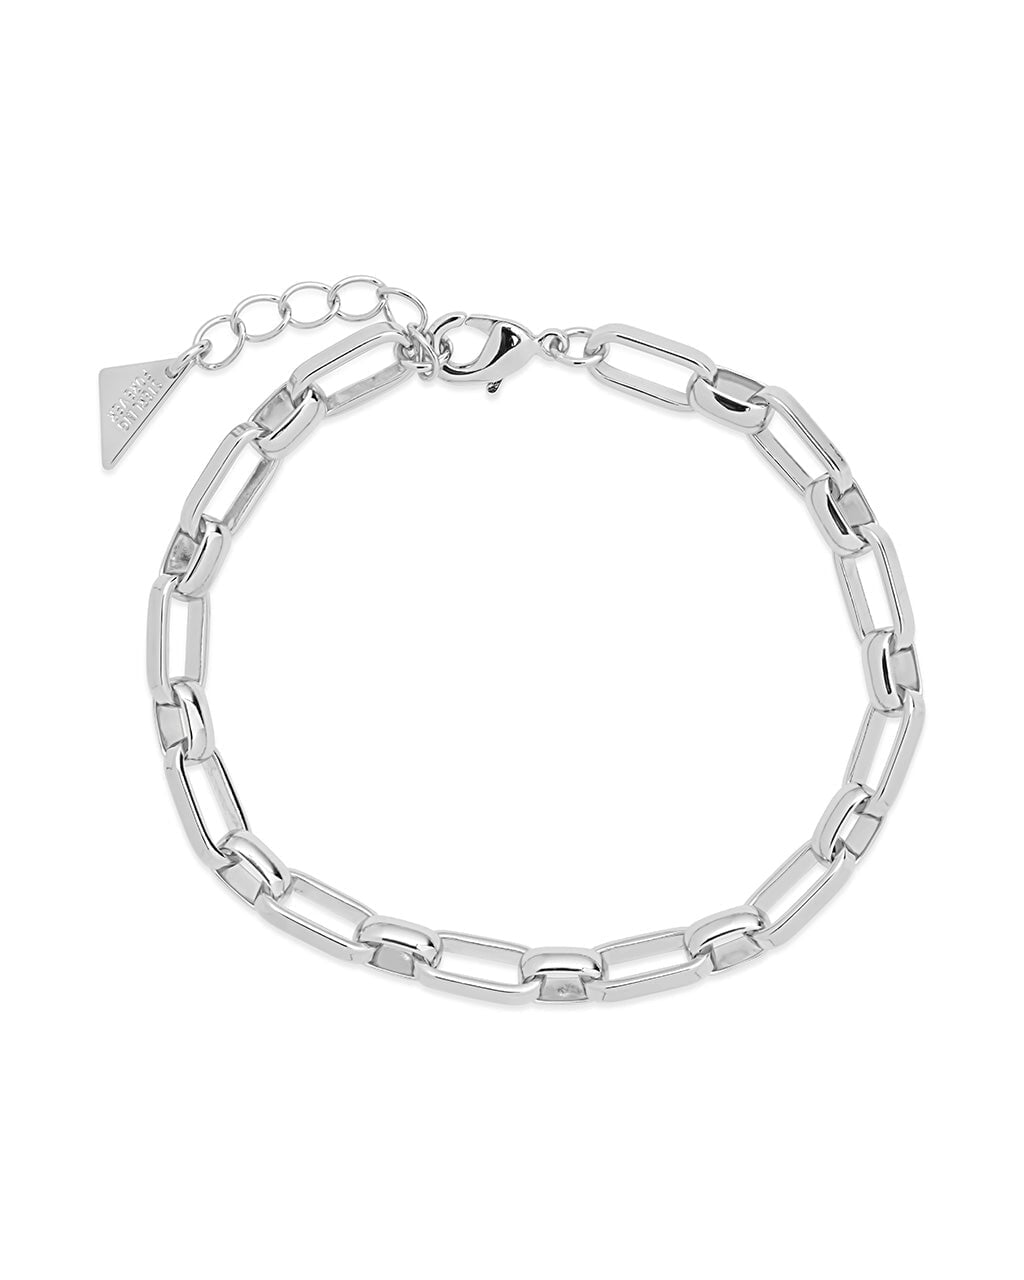 CZ Beaded Bracelet & Paperclip Chain Bracelet Set of 2 Bracelet Sterling Forever 